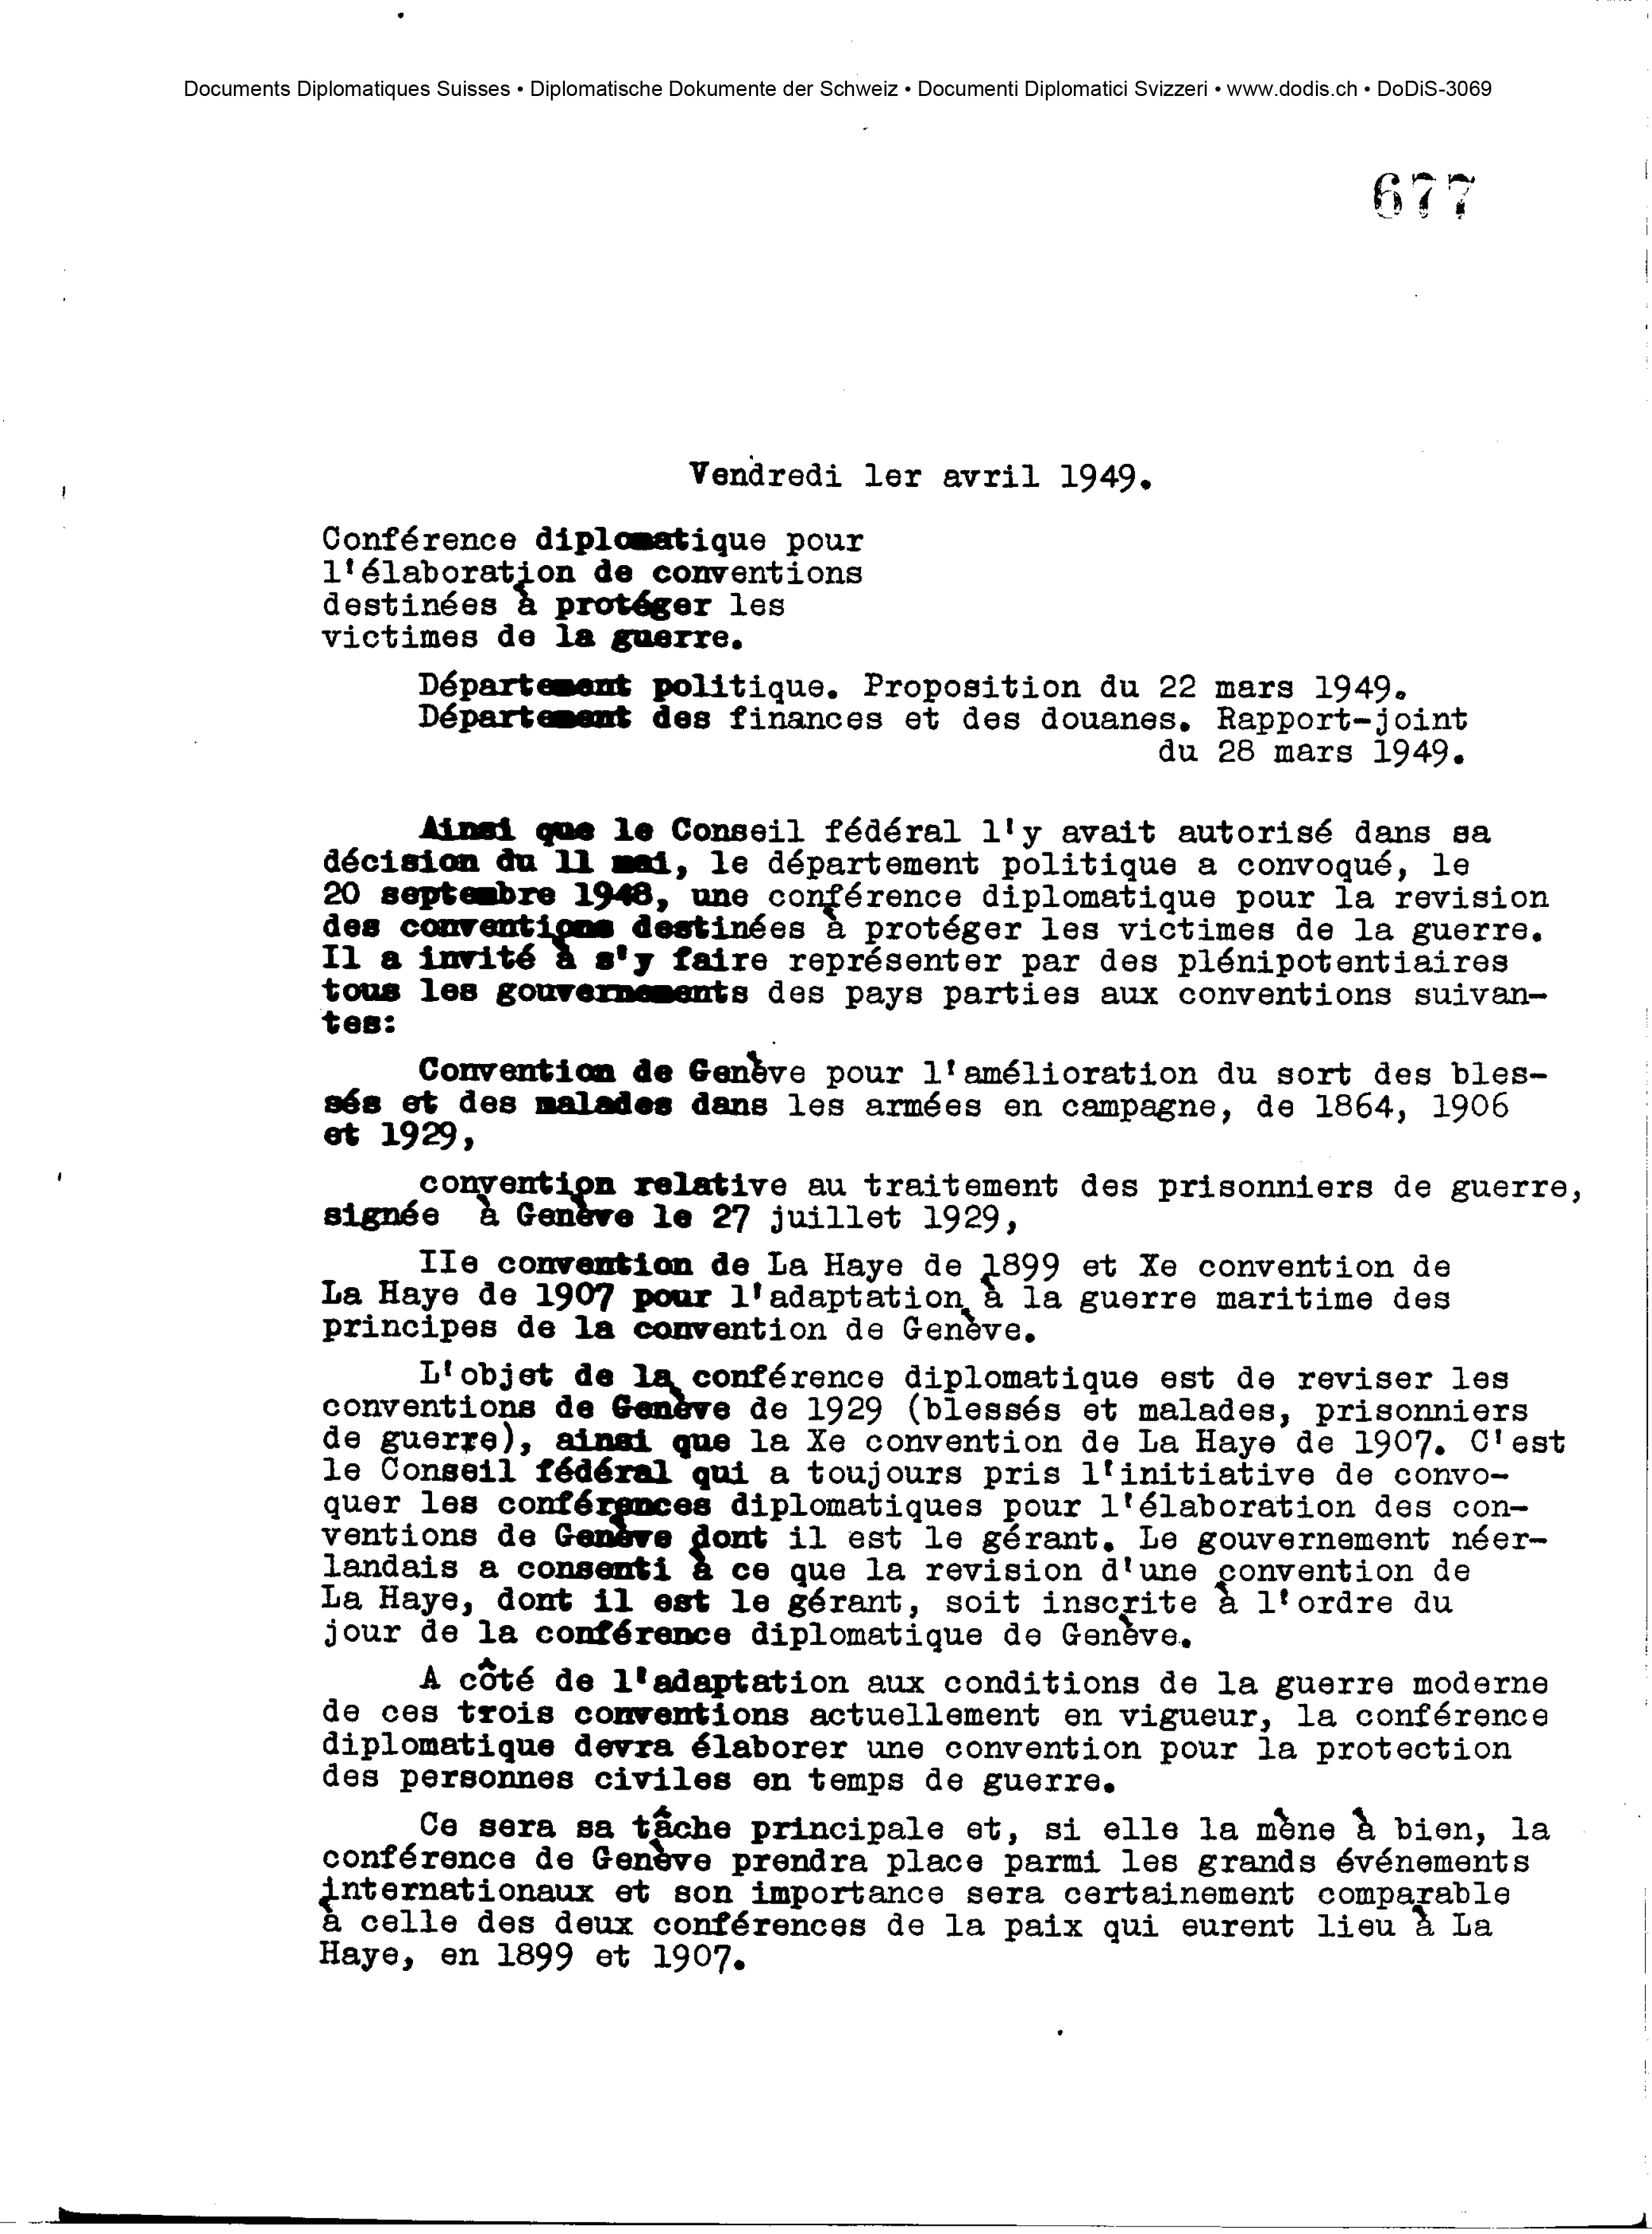 Décision du Conseil fédéral du 1er avril 1949